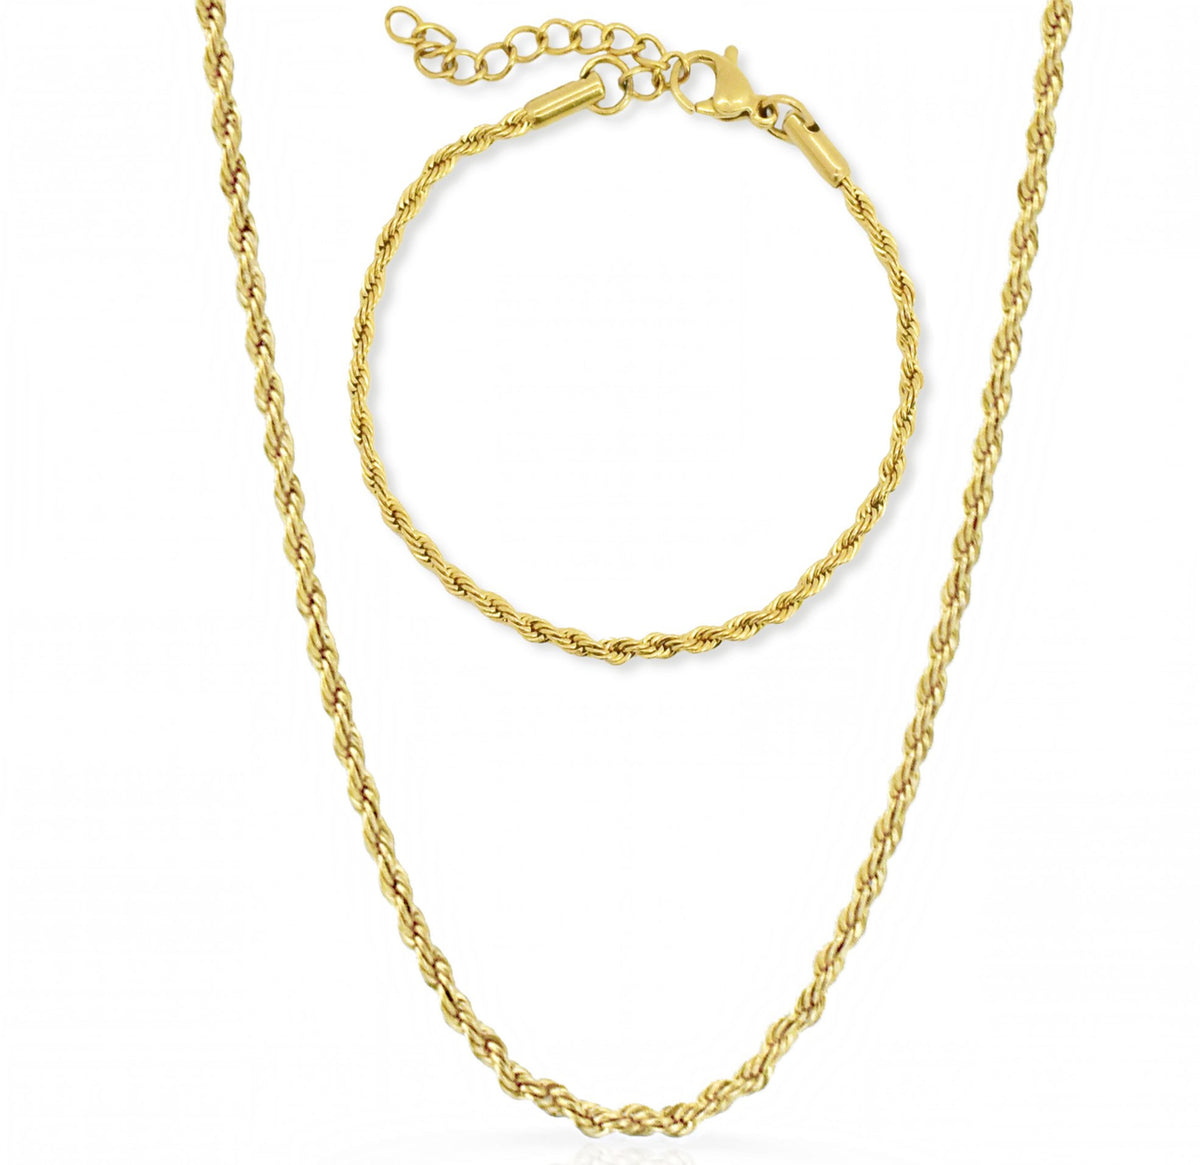 gold thin rope chain jewelry set waterproof